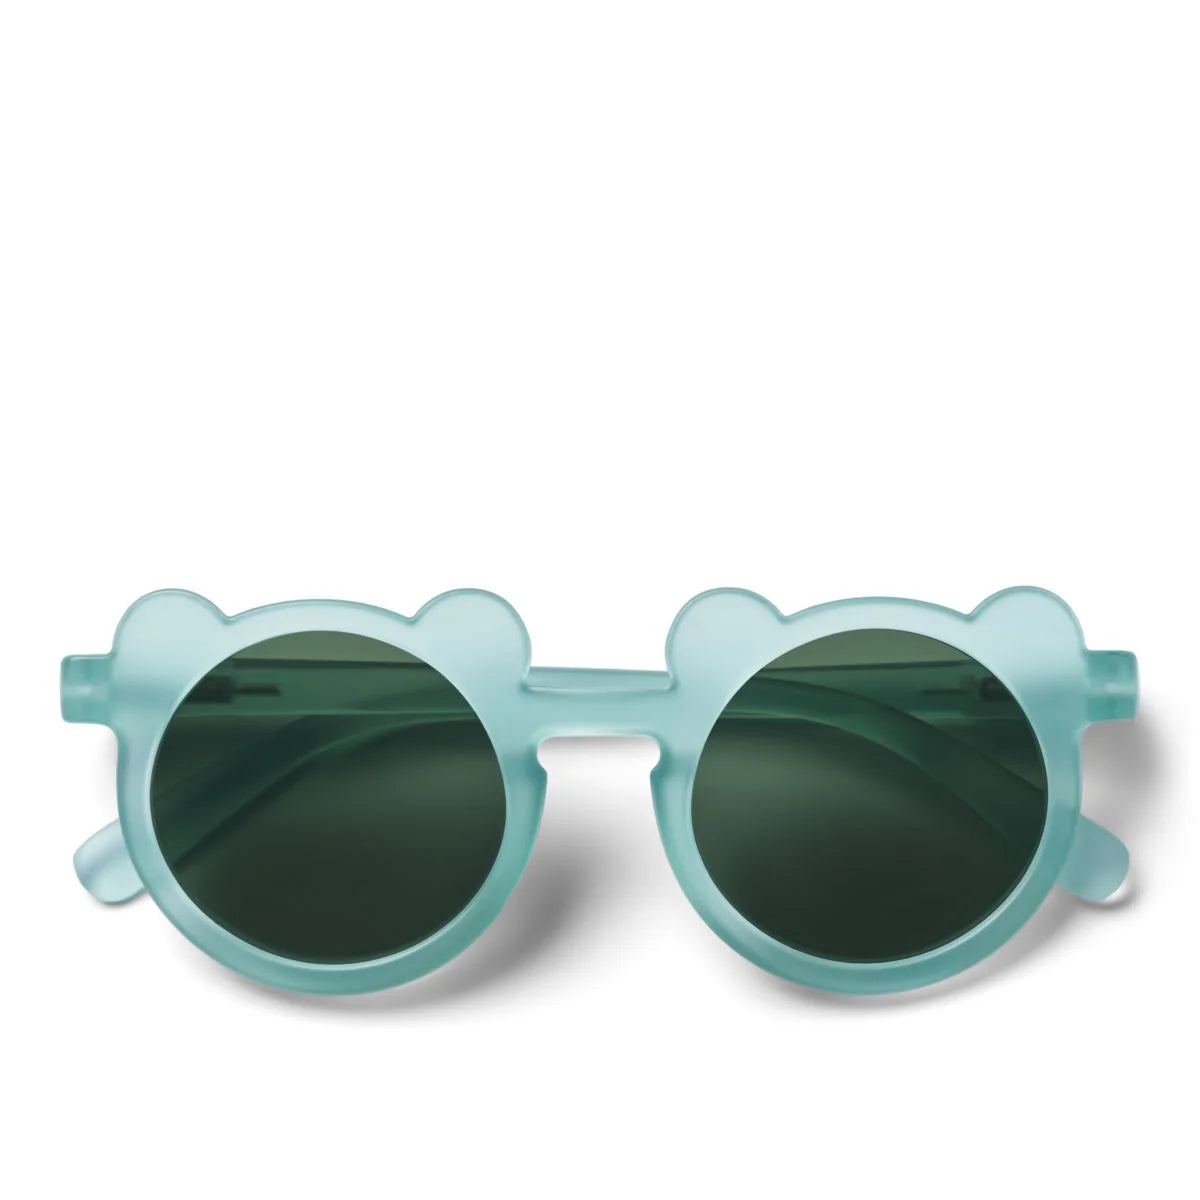 Darla Mr. Bear Sunglasses - Peppermint